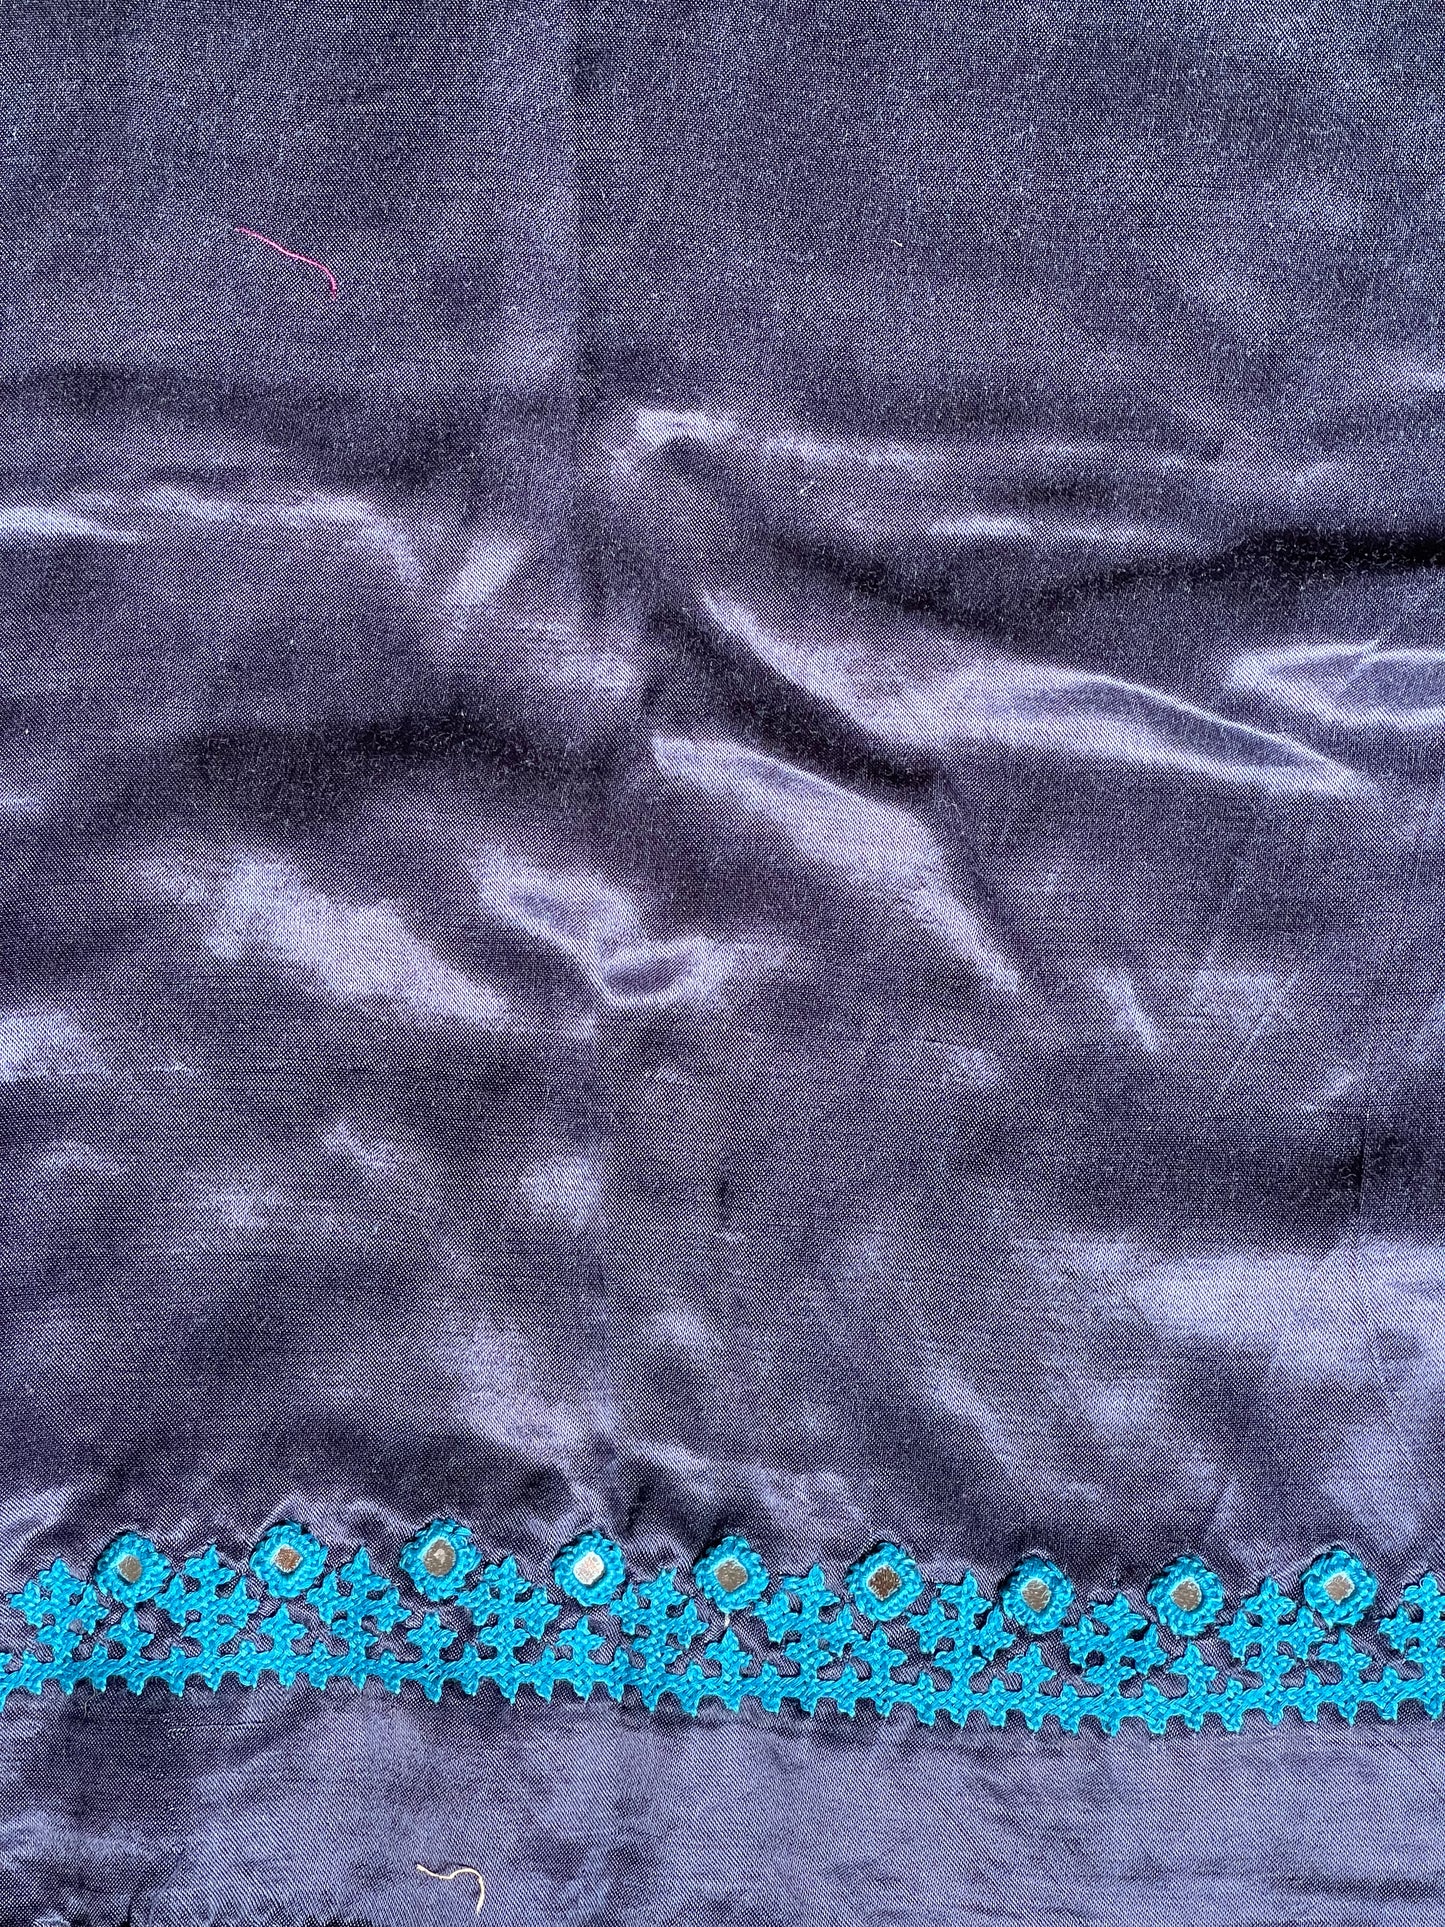 Blue on blue Kutchi hand embroidered mashru blouse fabric